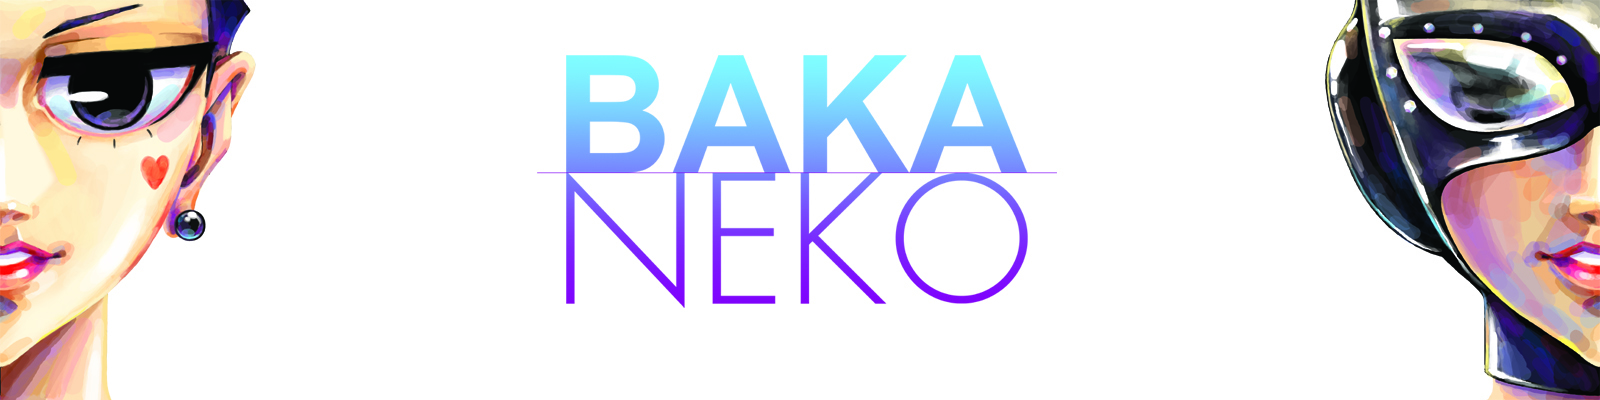 обложка автора Baka Neko